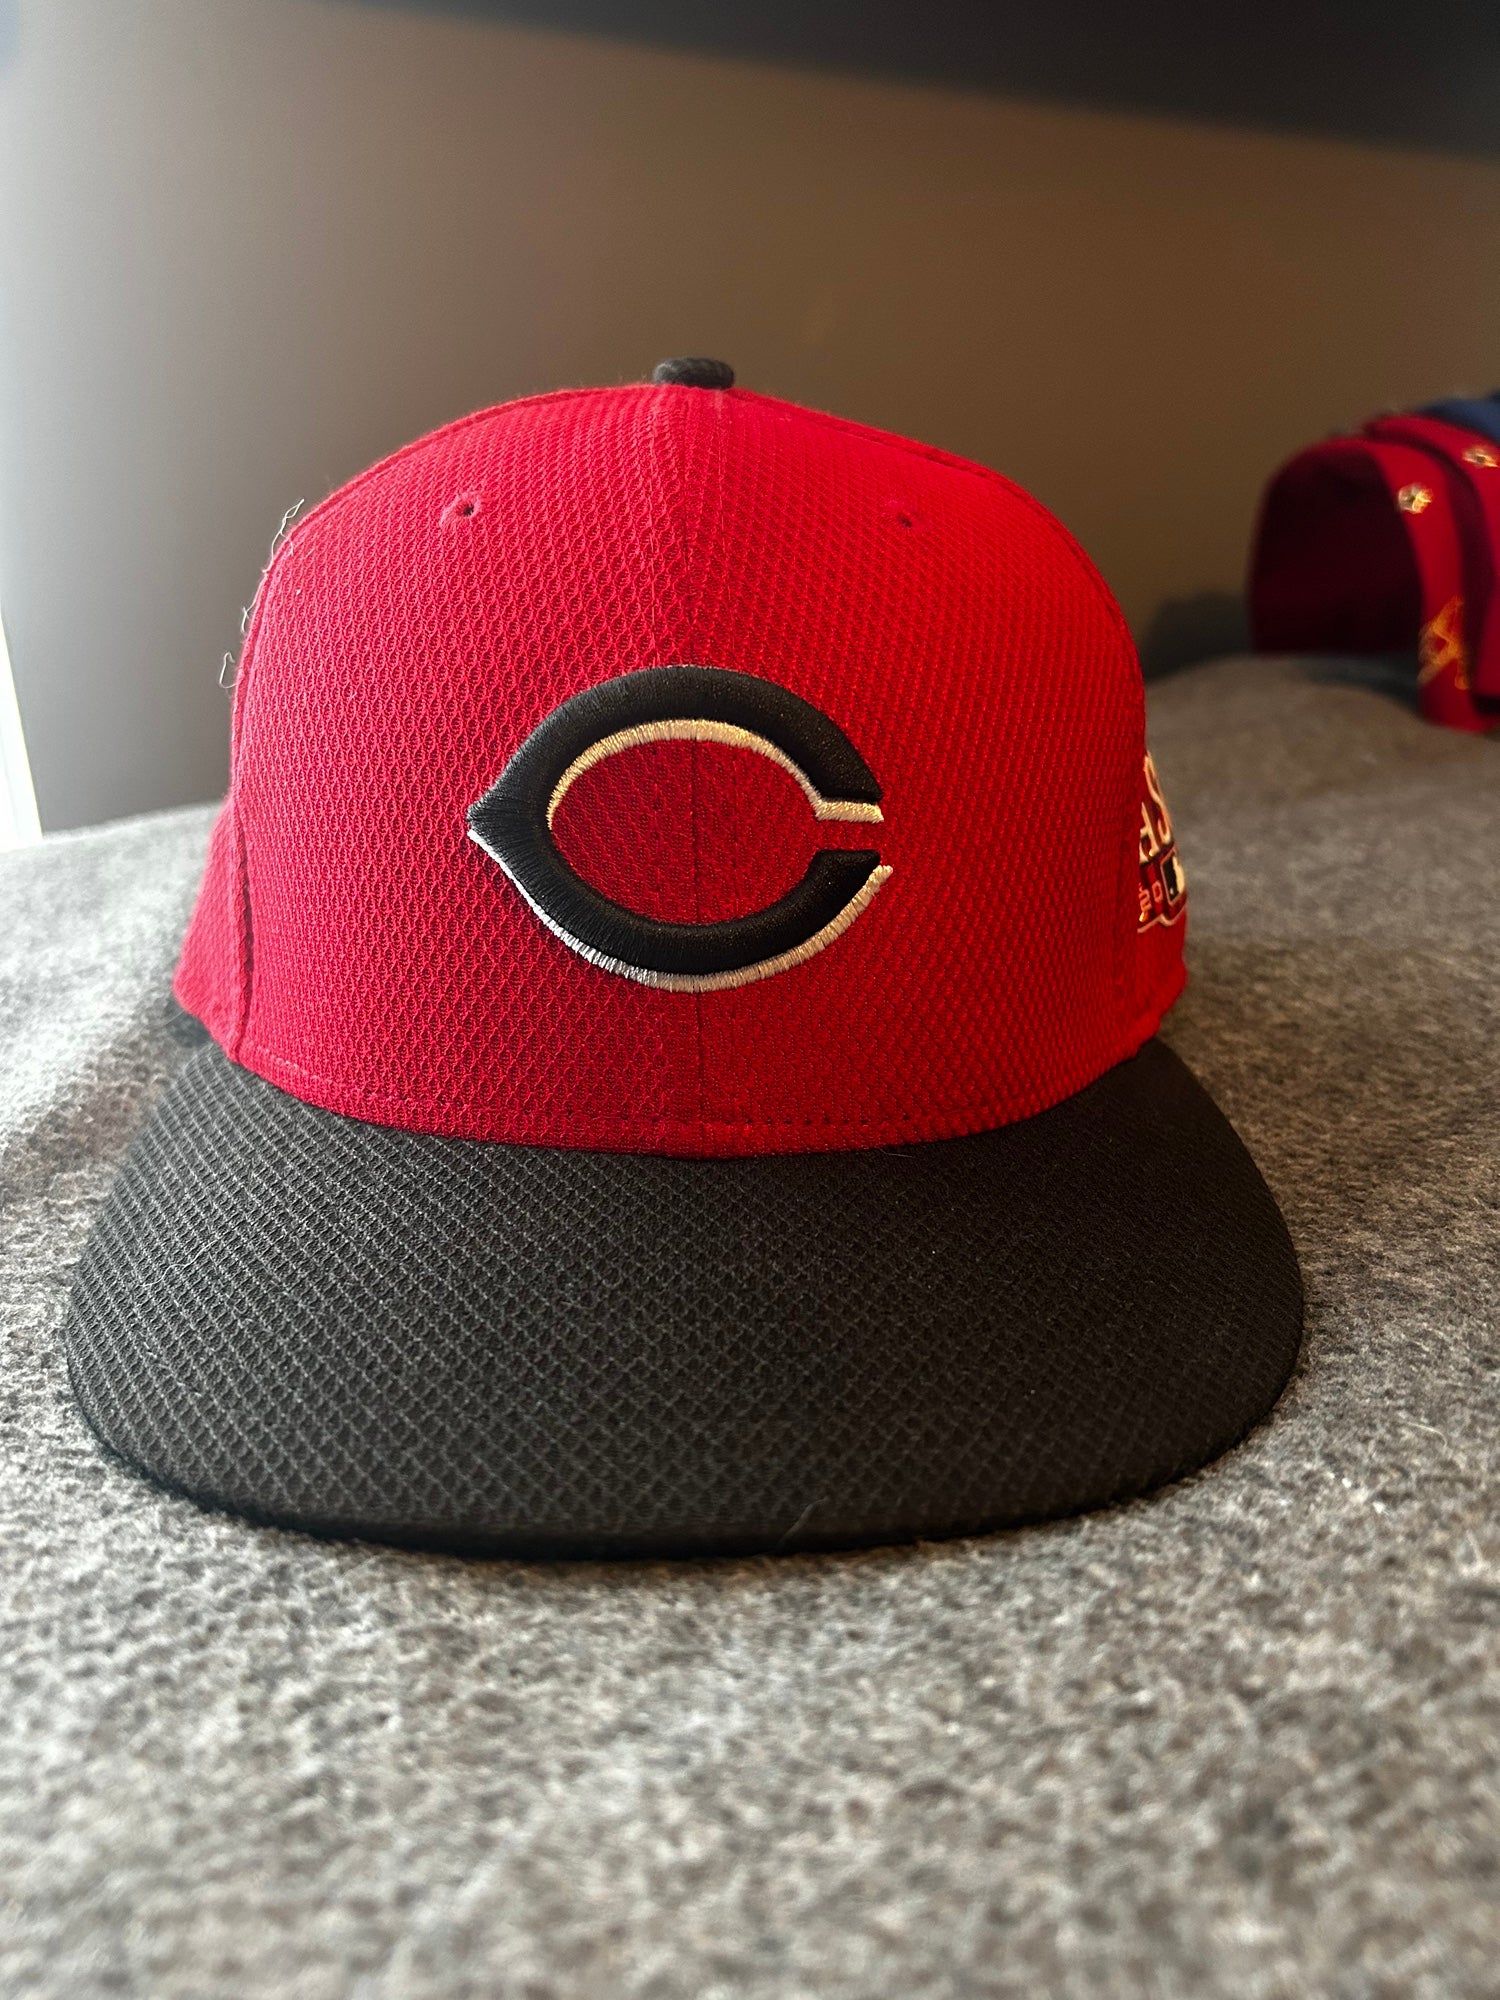 Hats and Tats: A Lifestyle: April 3- Cincinnati Reds